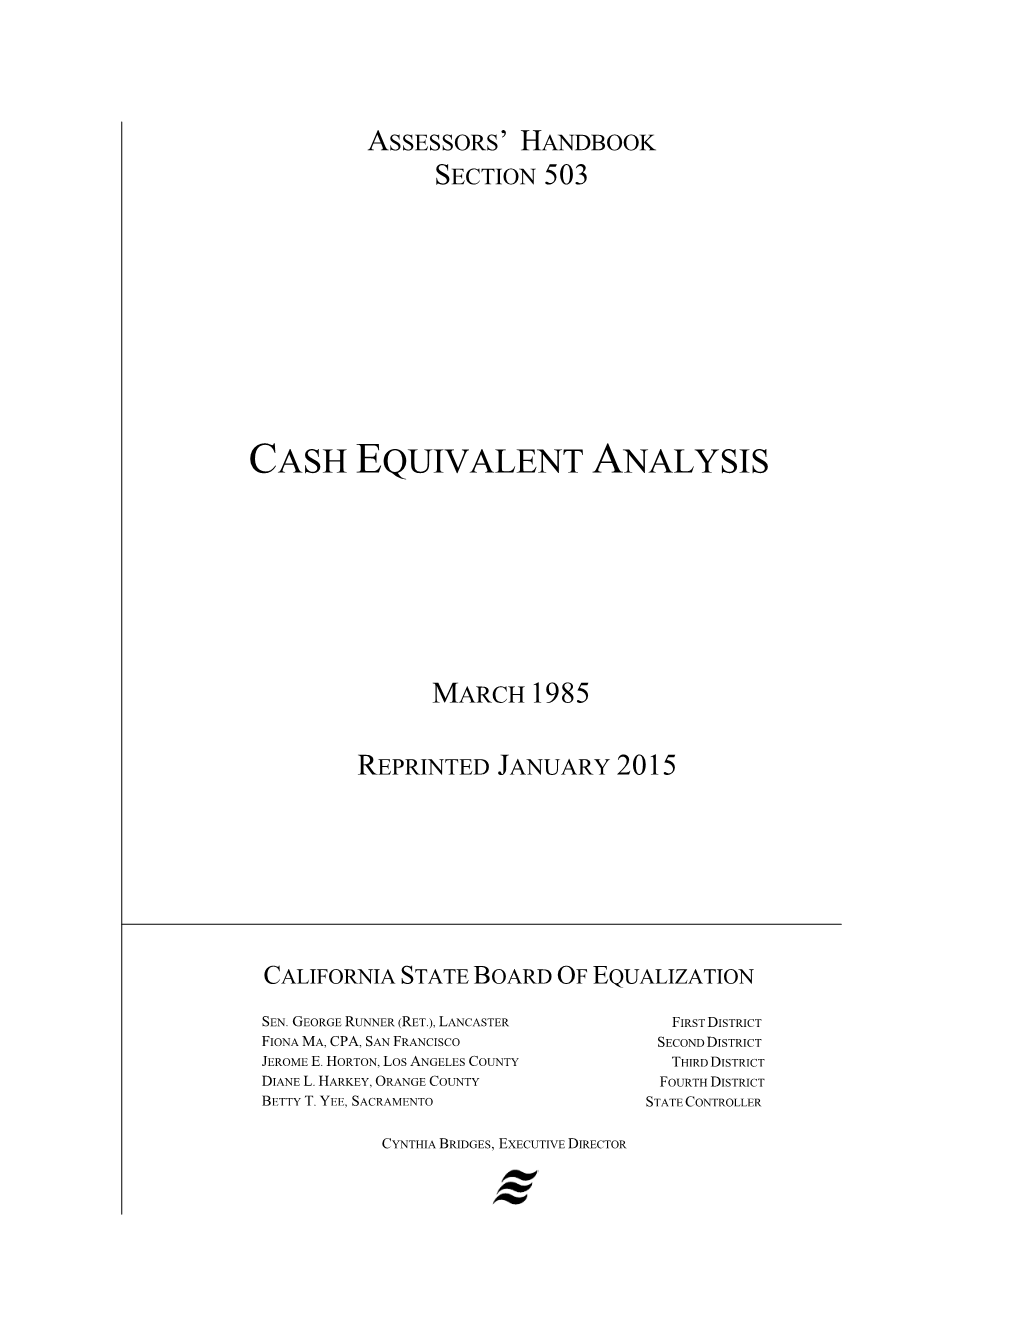 AH 503, Cash Equivalent Analysis